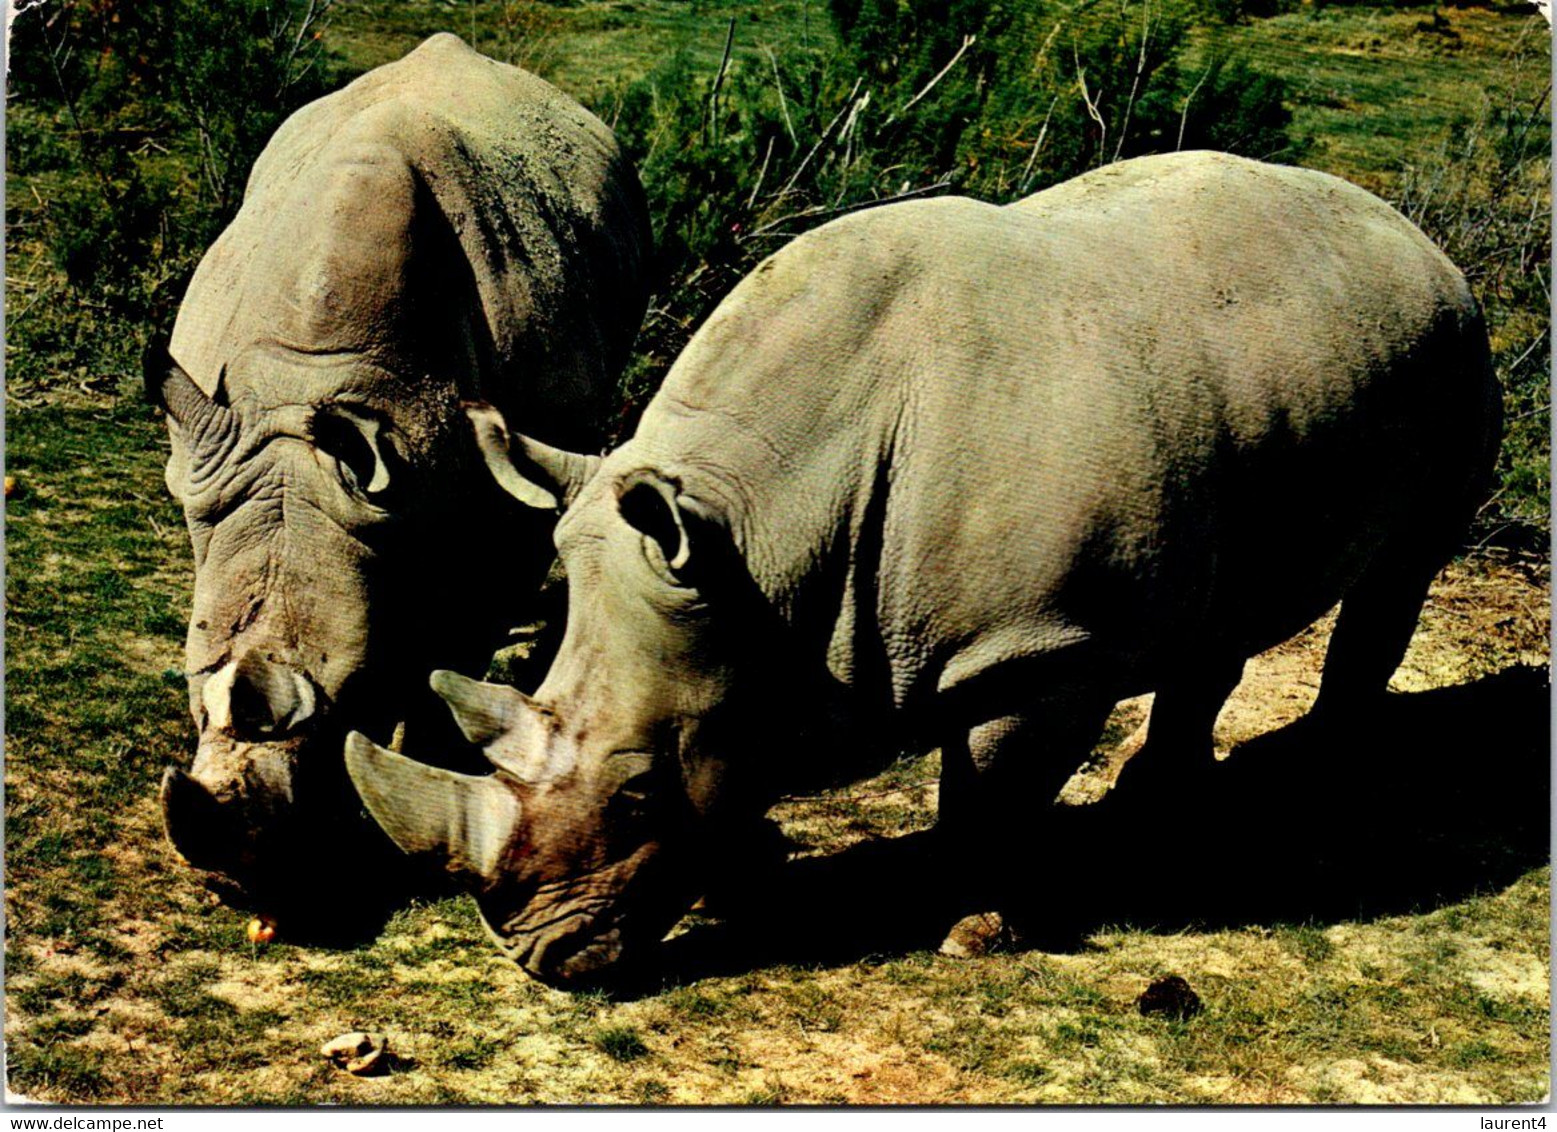 (2 M 10) (M+S) France - Sigean Nature Reserve (ZOO) Rhinocéros - Rhinozeros